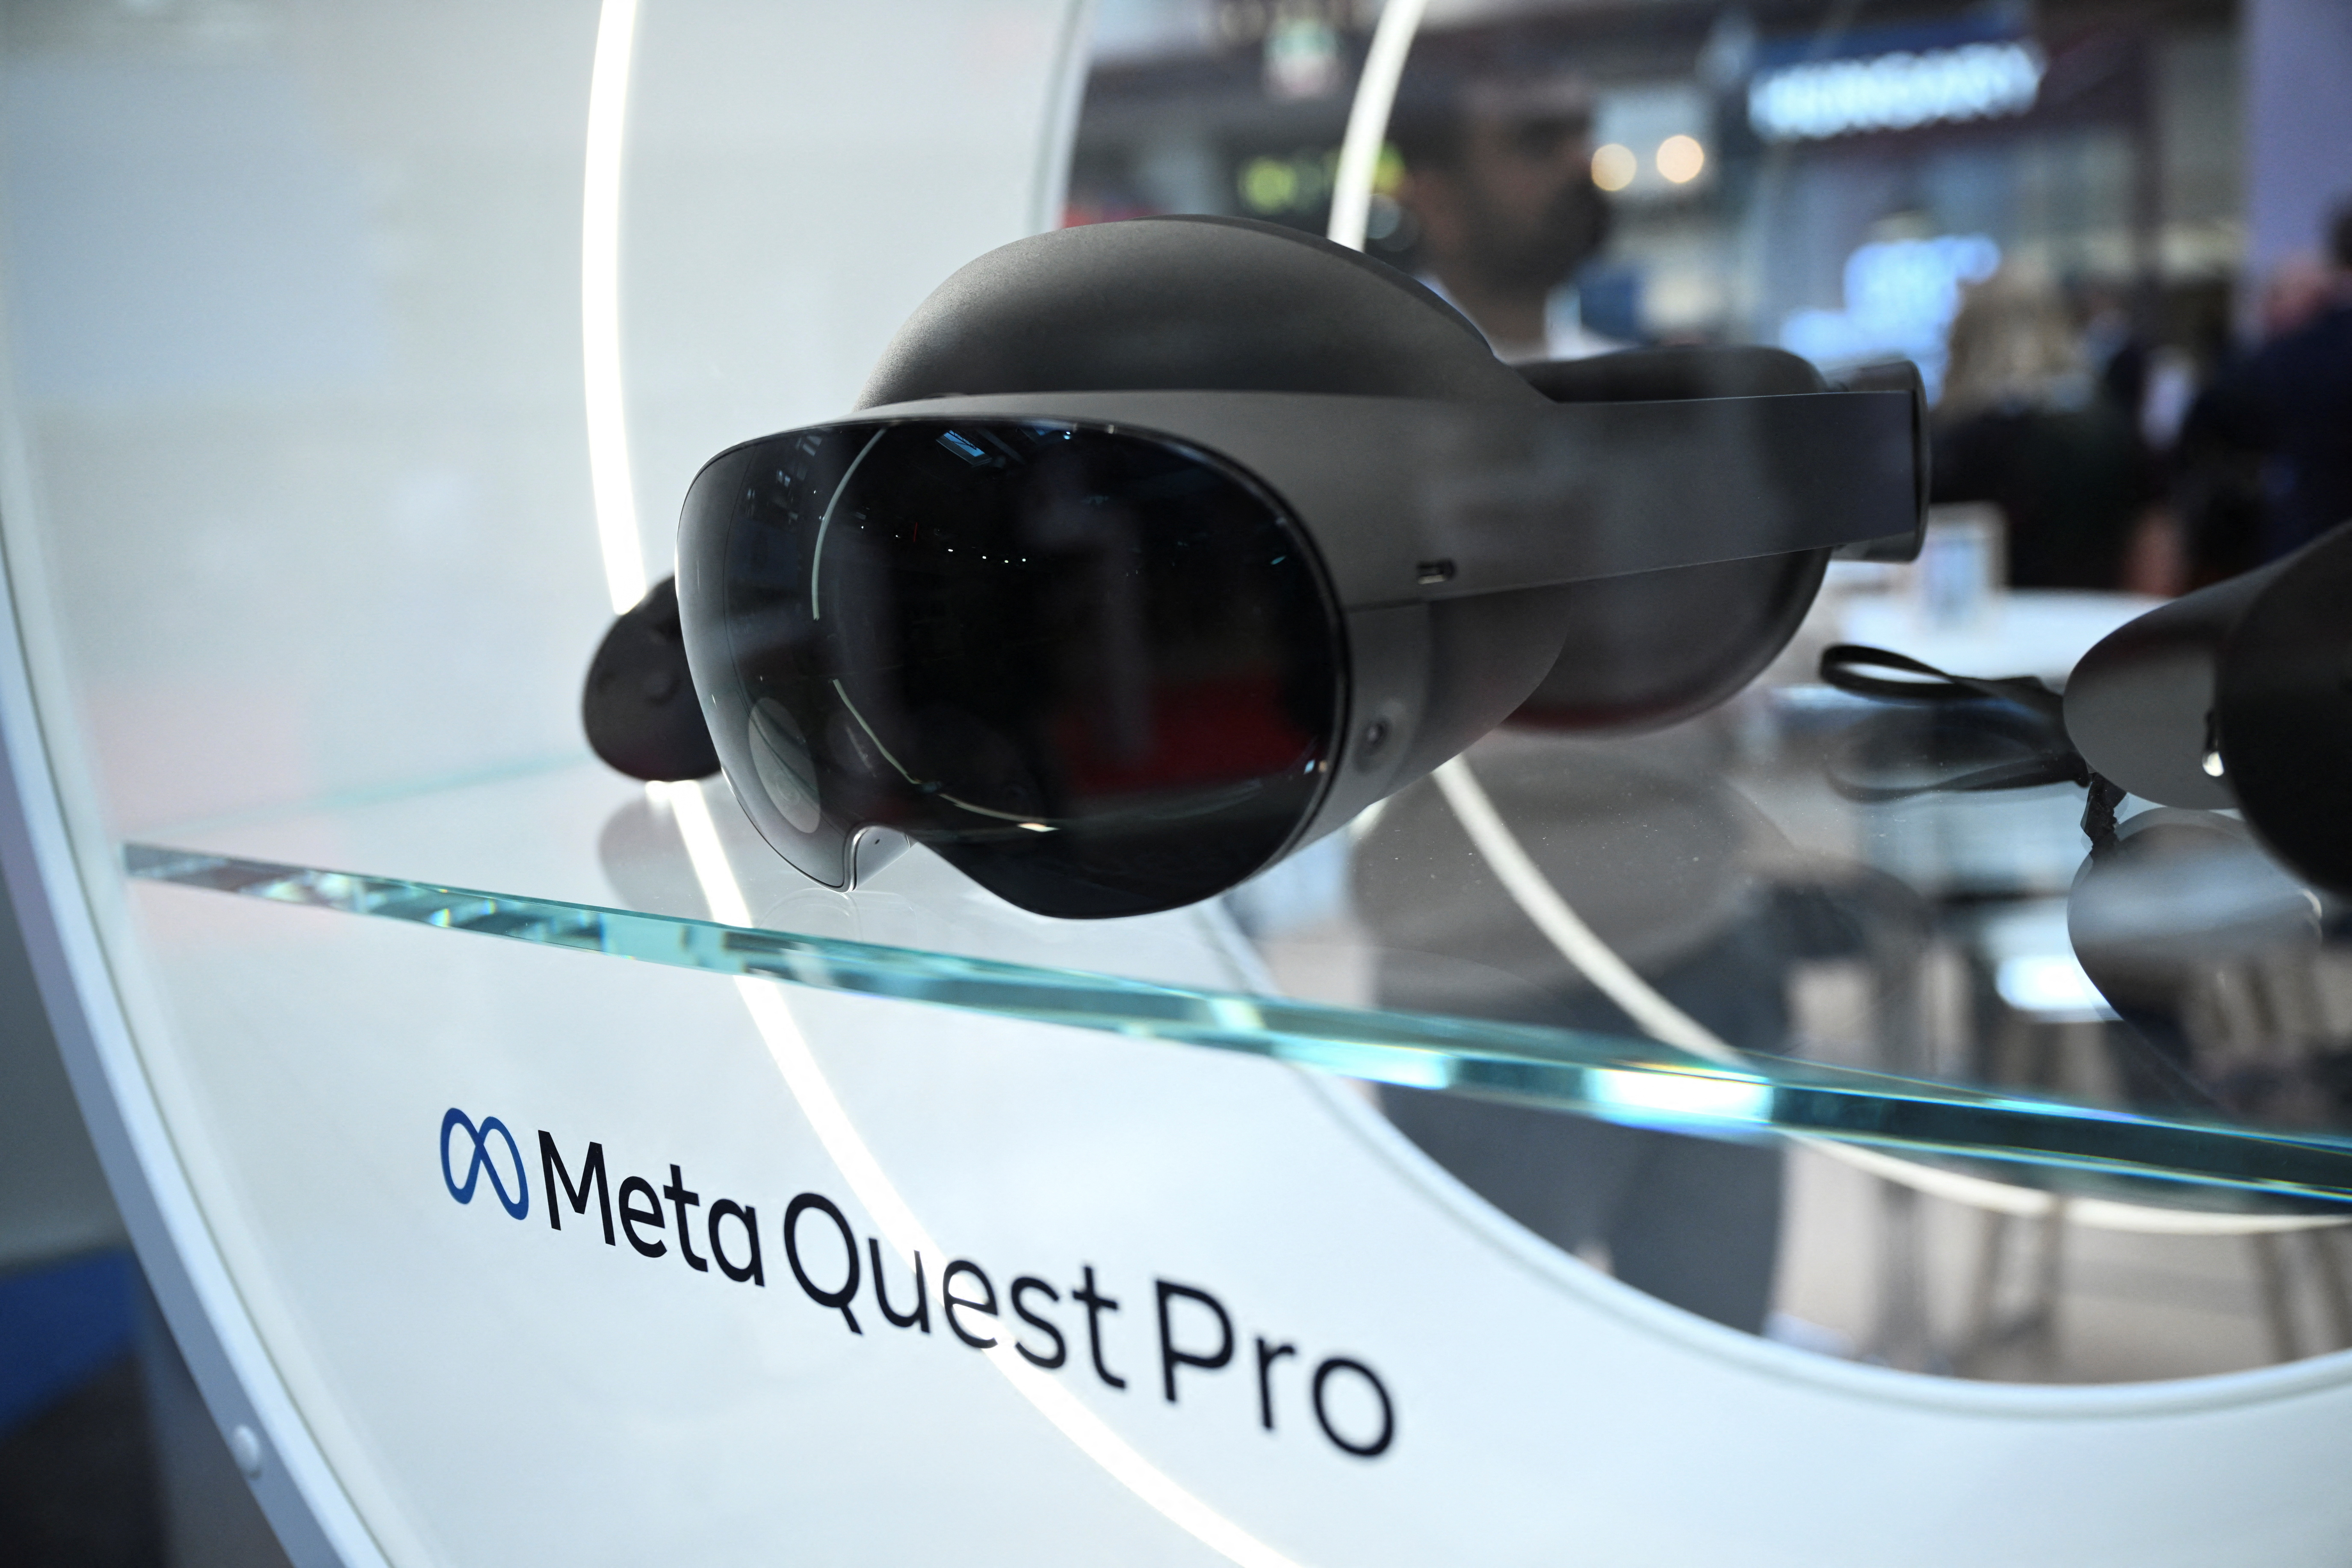 Meta Quest Pro device on a shelf.